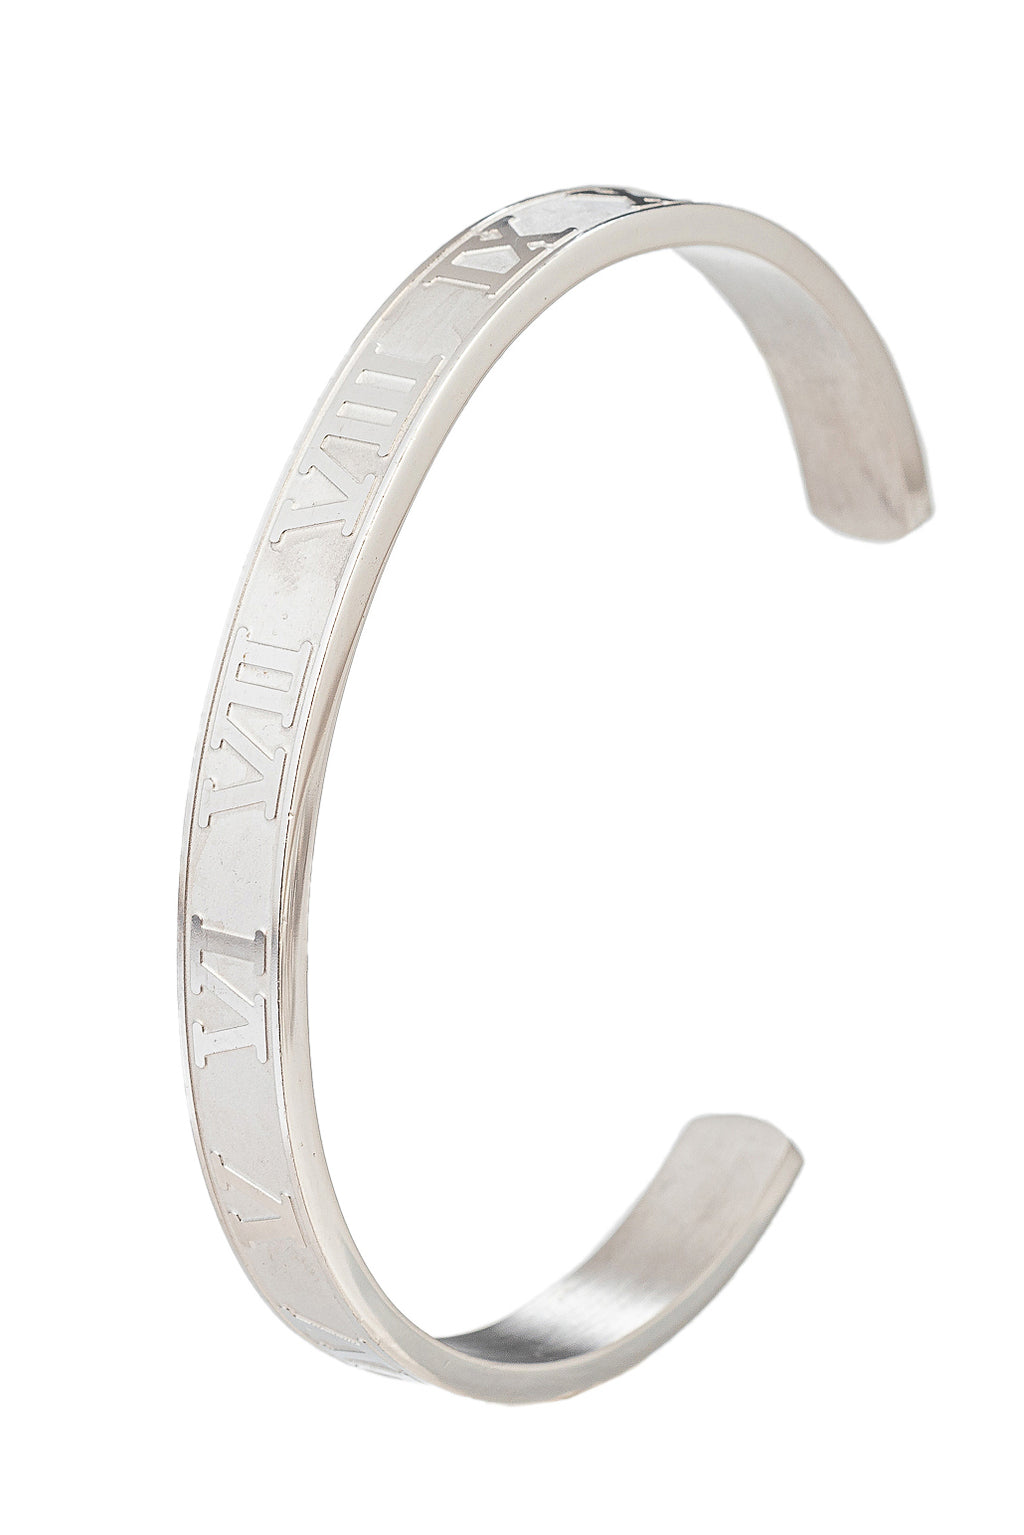 Silver tone titanium Roman numeral cuff bracelet.